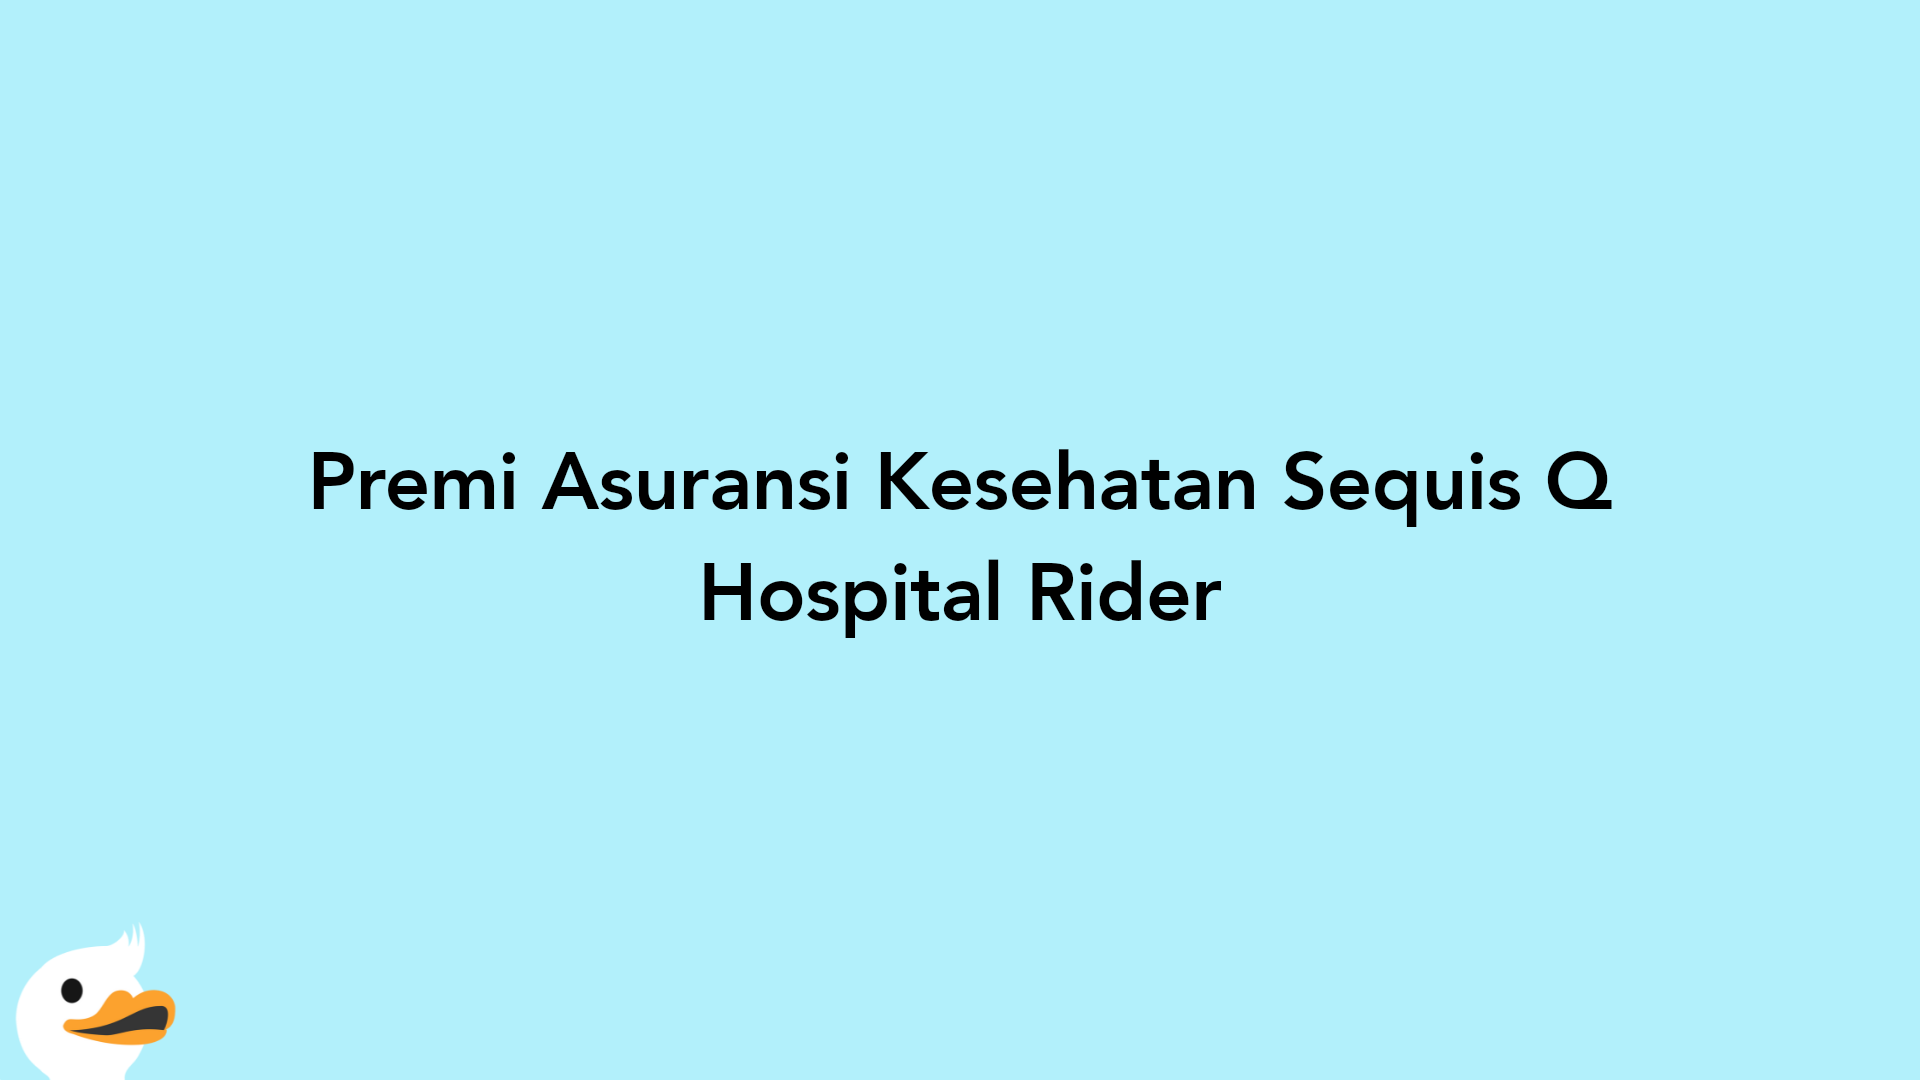 Premi Asuransi Kesehatan Sequis Q Hospital Rider